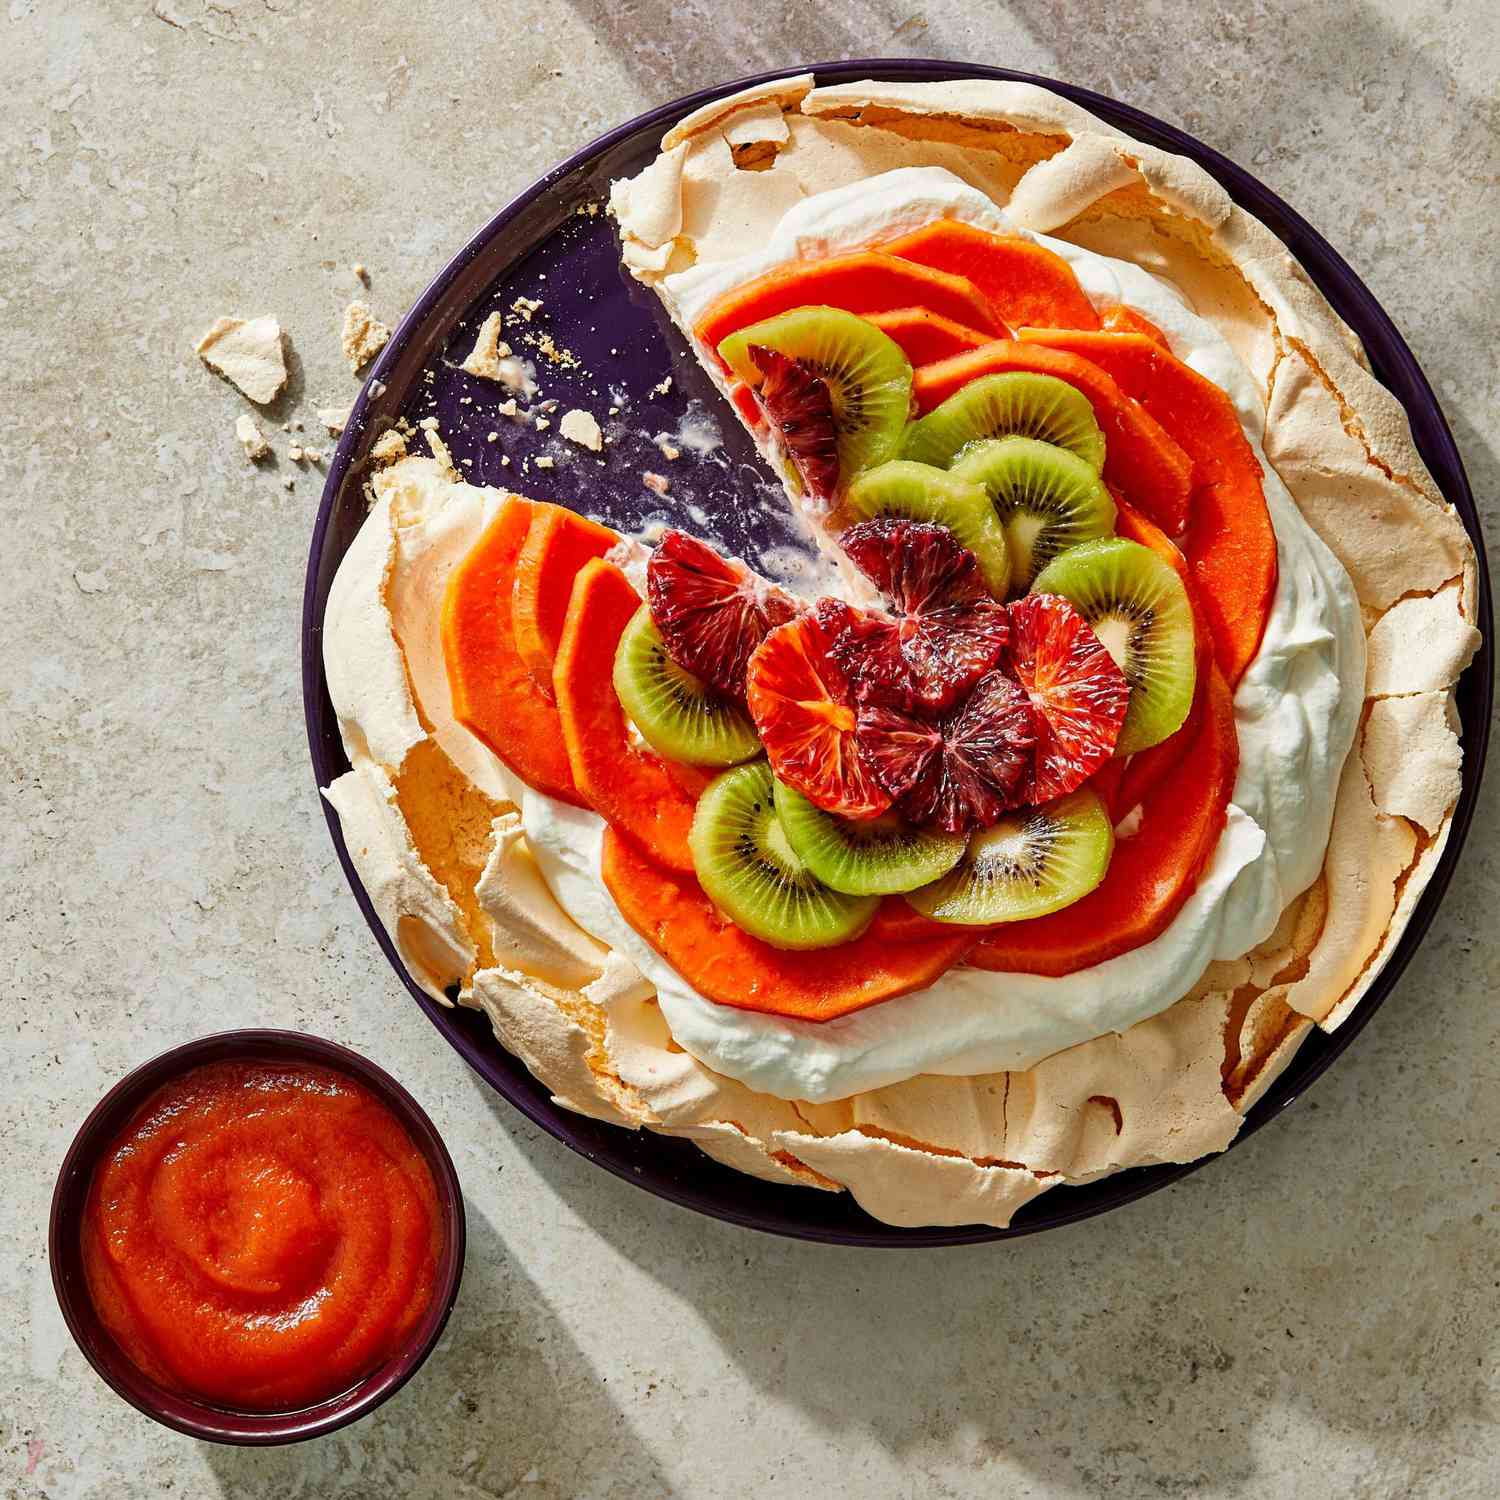 Papaya, blood orange, and kiwi on a layer of cream sitting atop a meringue base